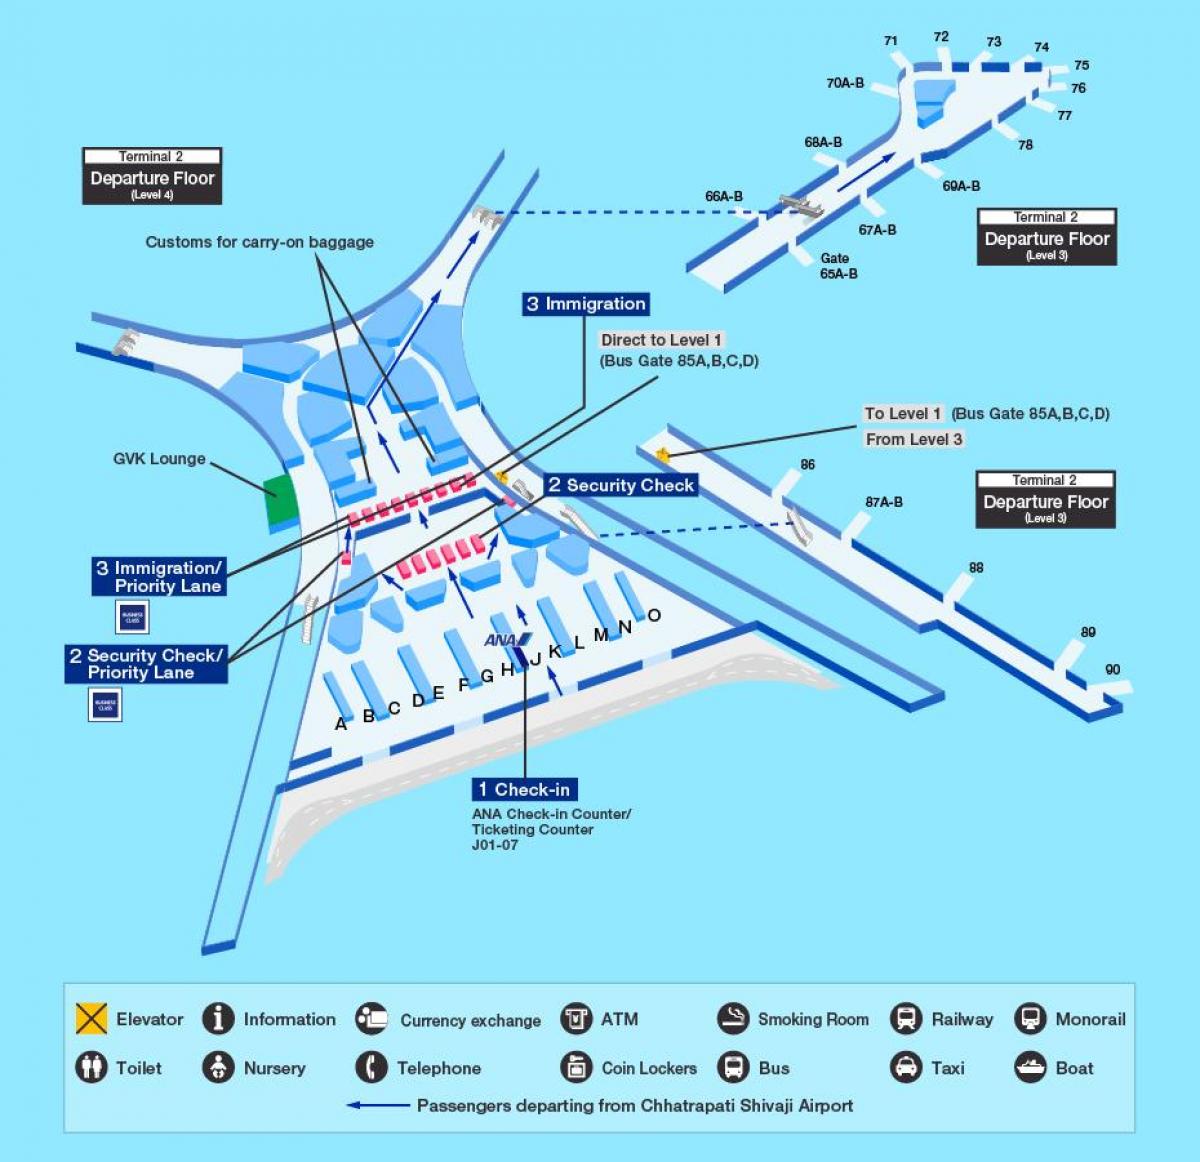 Mumbai international airport terminal 2 carte